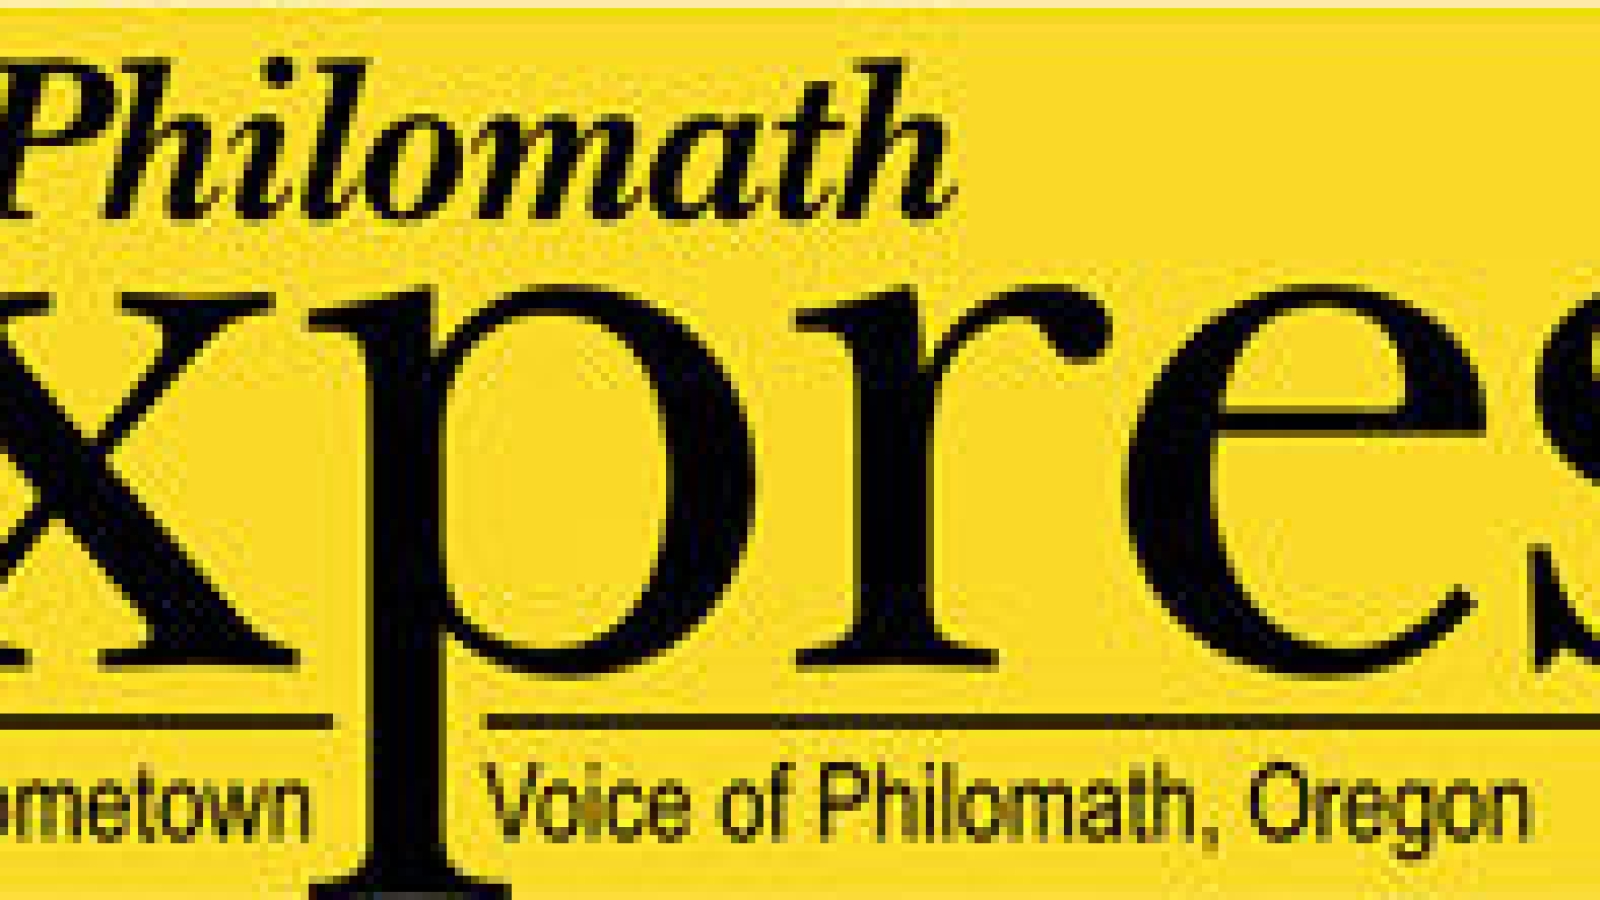 philomath-express